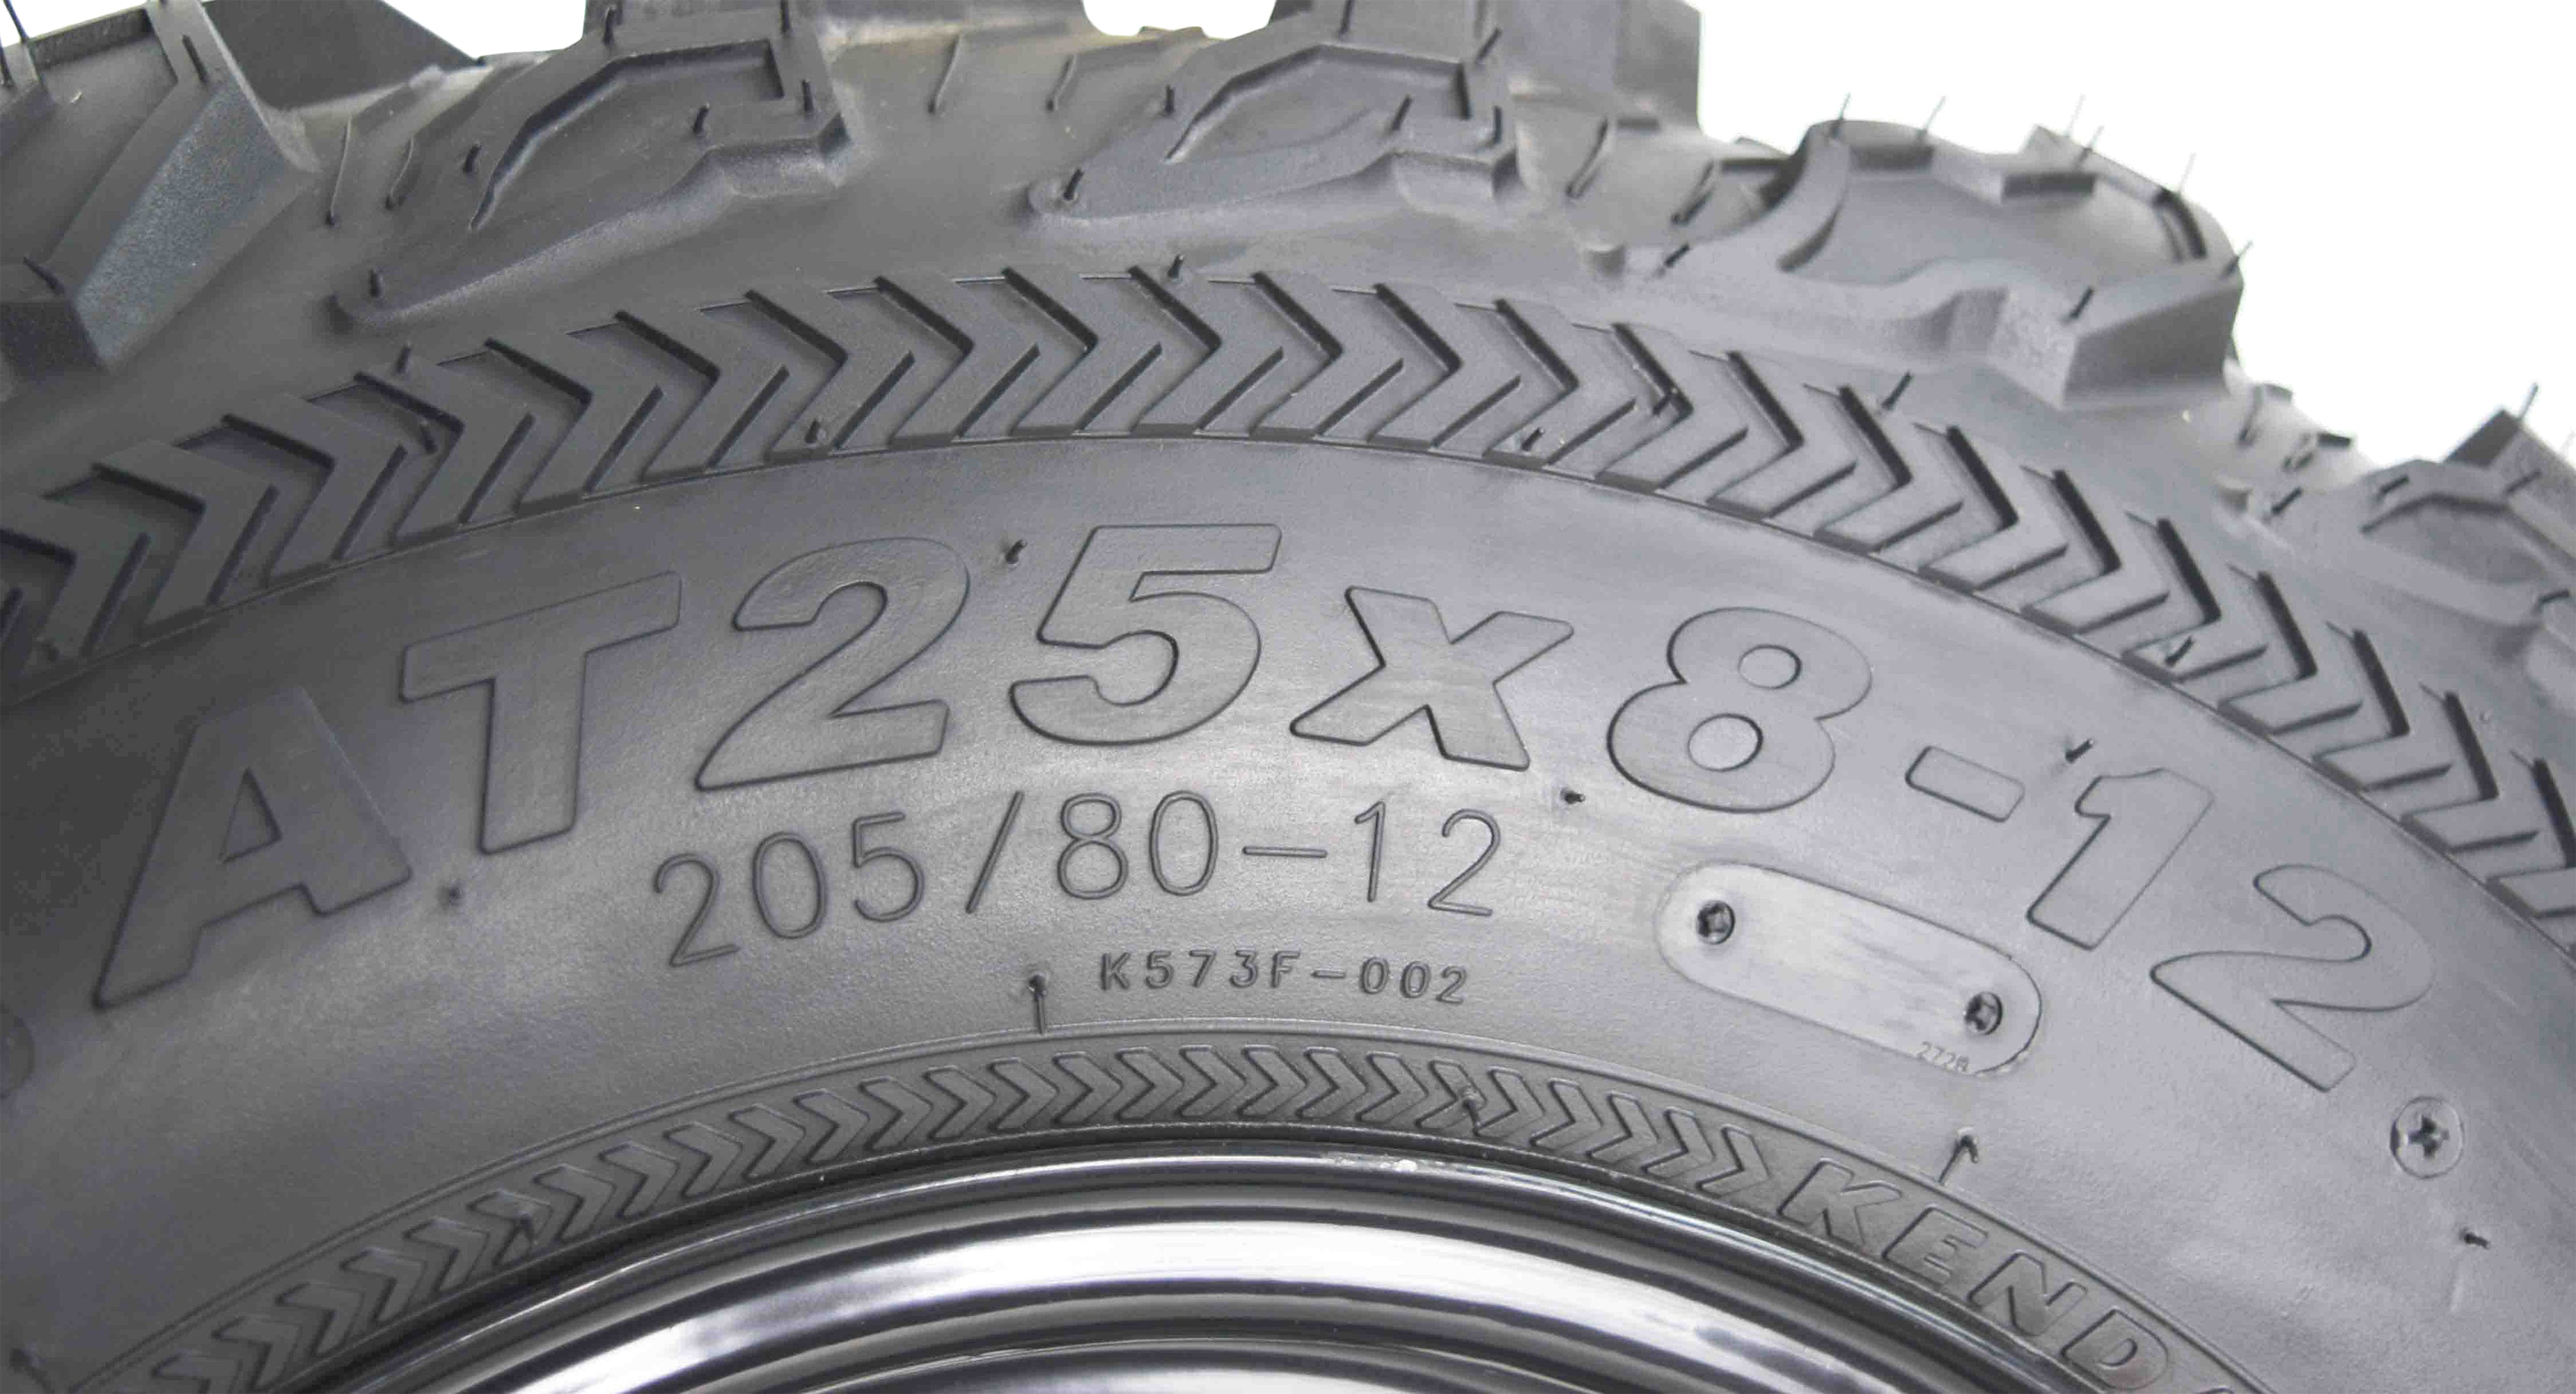 Kenda Bear Claw EX 25x8-12 Front ATV 6 PLY Tire Bearclaw 25x8x12 Single Tire